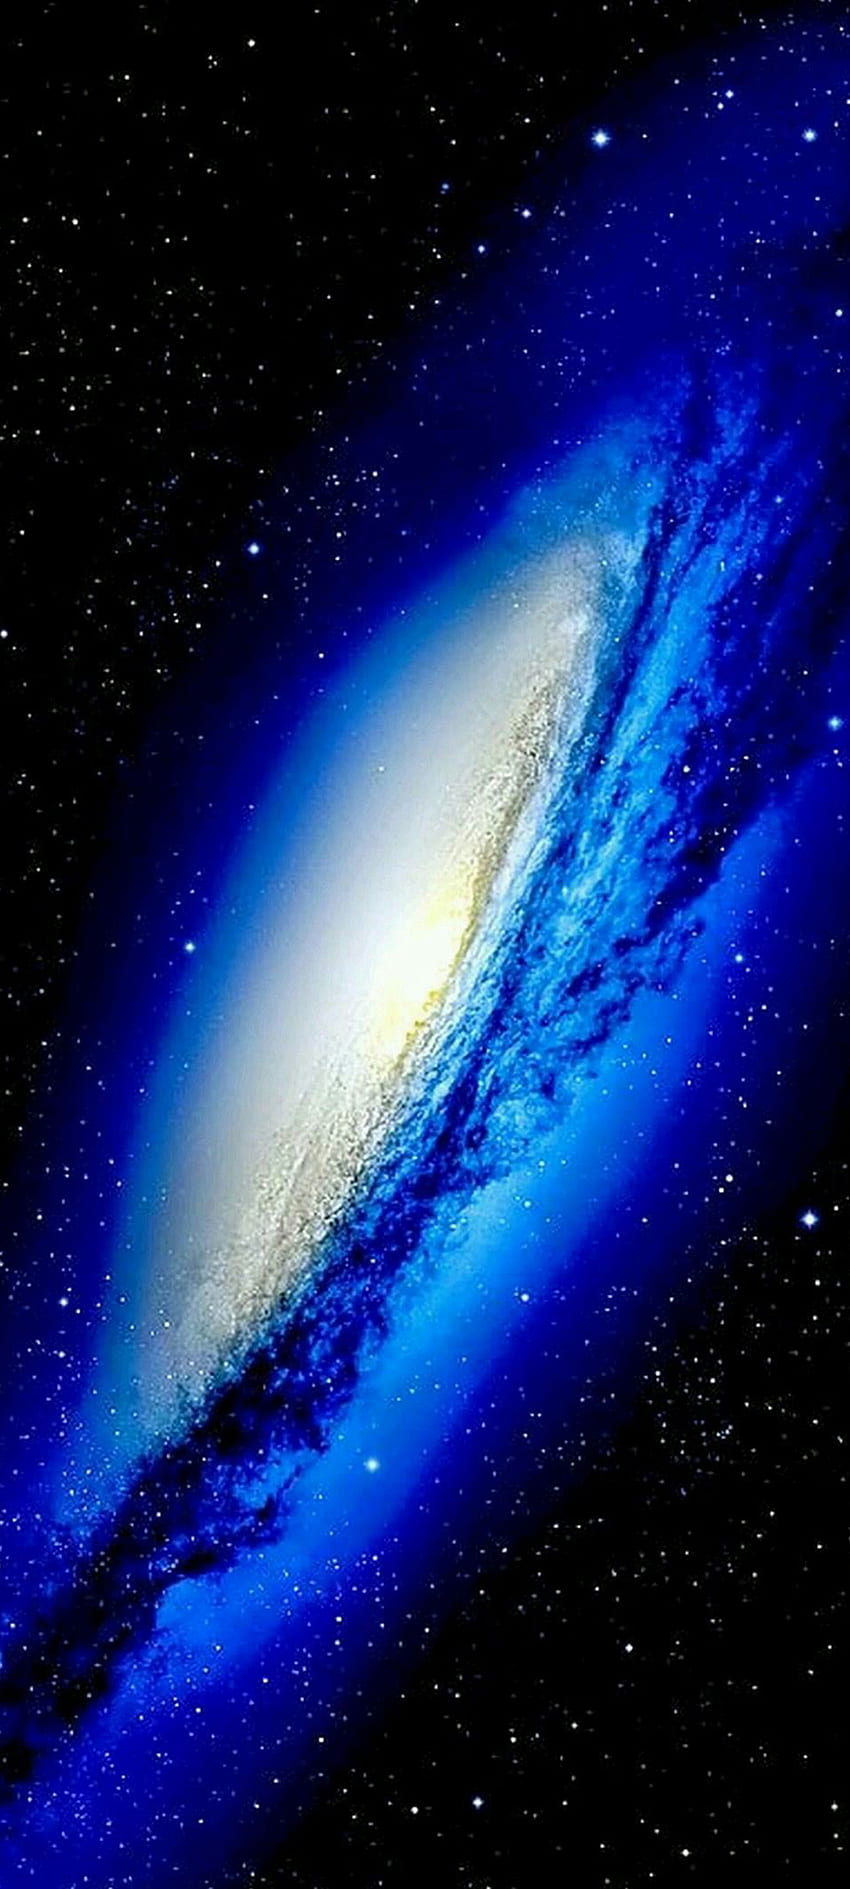 Pin Pinterest Artistik Terbaik untuk Samsung A Quantum Anda - Andromeda Galaxy - . Latar belakang. Ponsel , Ponsel Galaksi Andromeda wallpaper ponsel HD